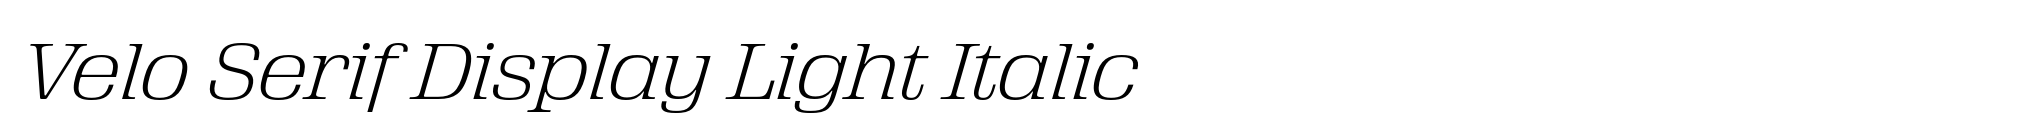 Velo Serif Display Light Italic image